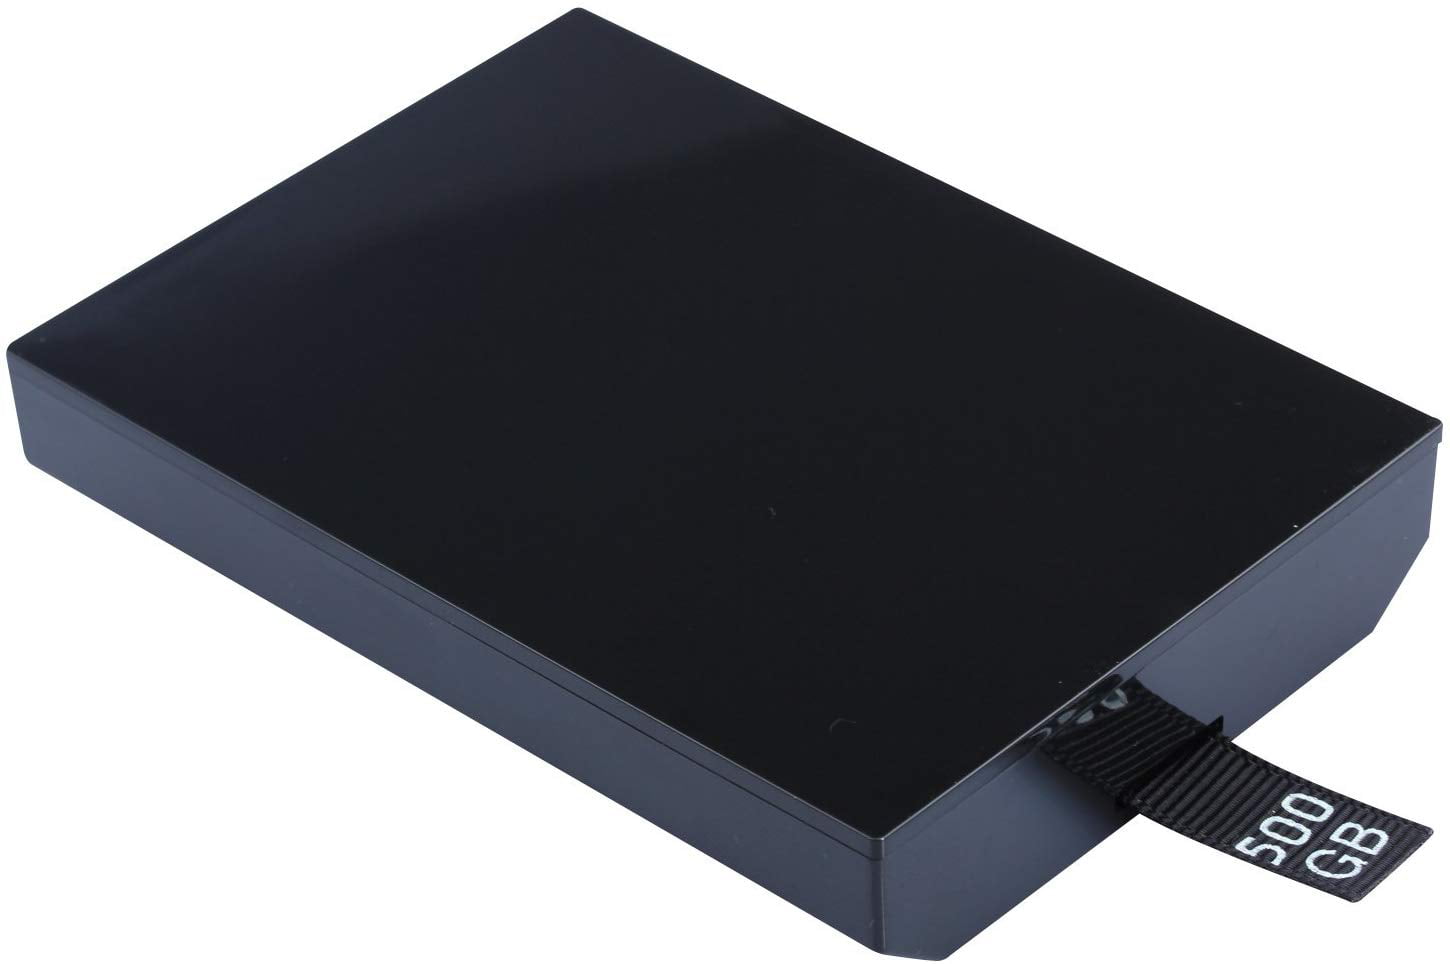 Restored Microsoft Xbox 360 Slim 4GB Video Game Console Matching Black  Controller HDMI (Refurbished)